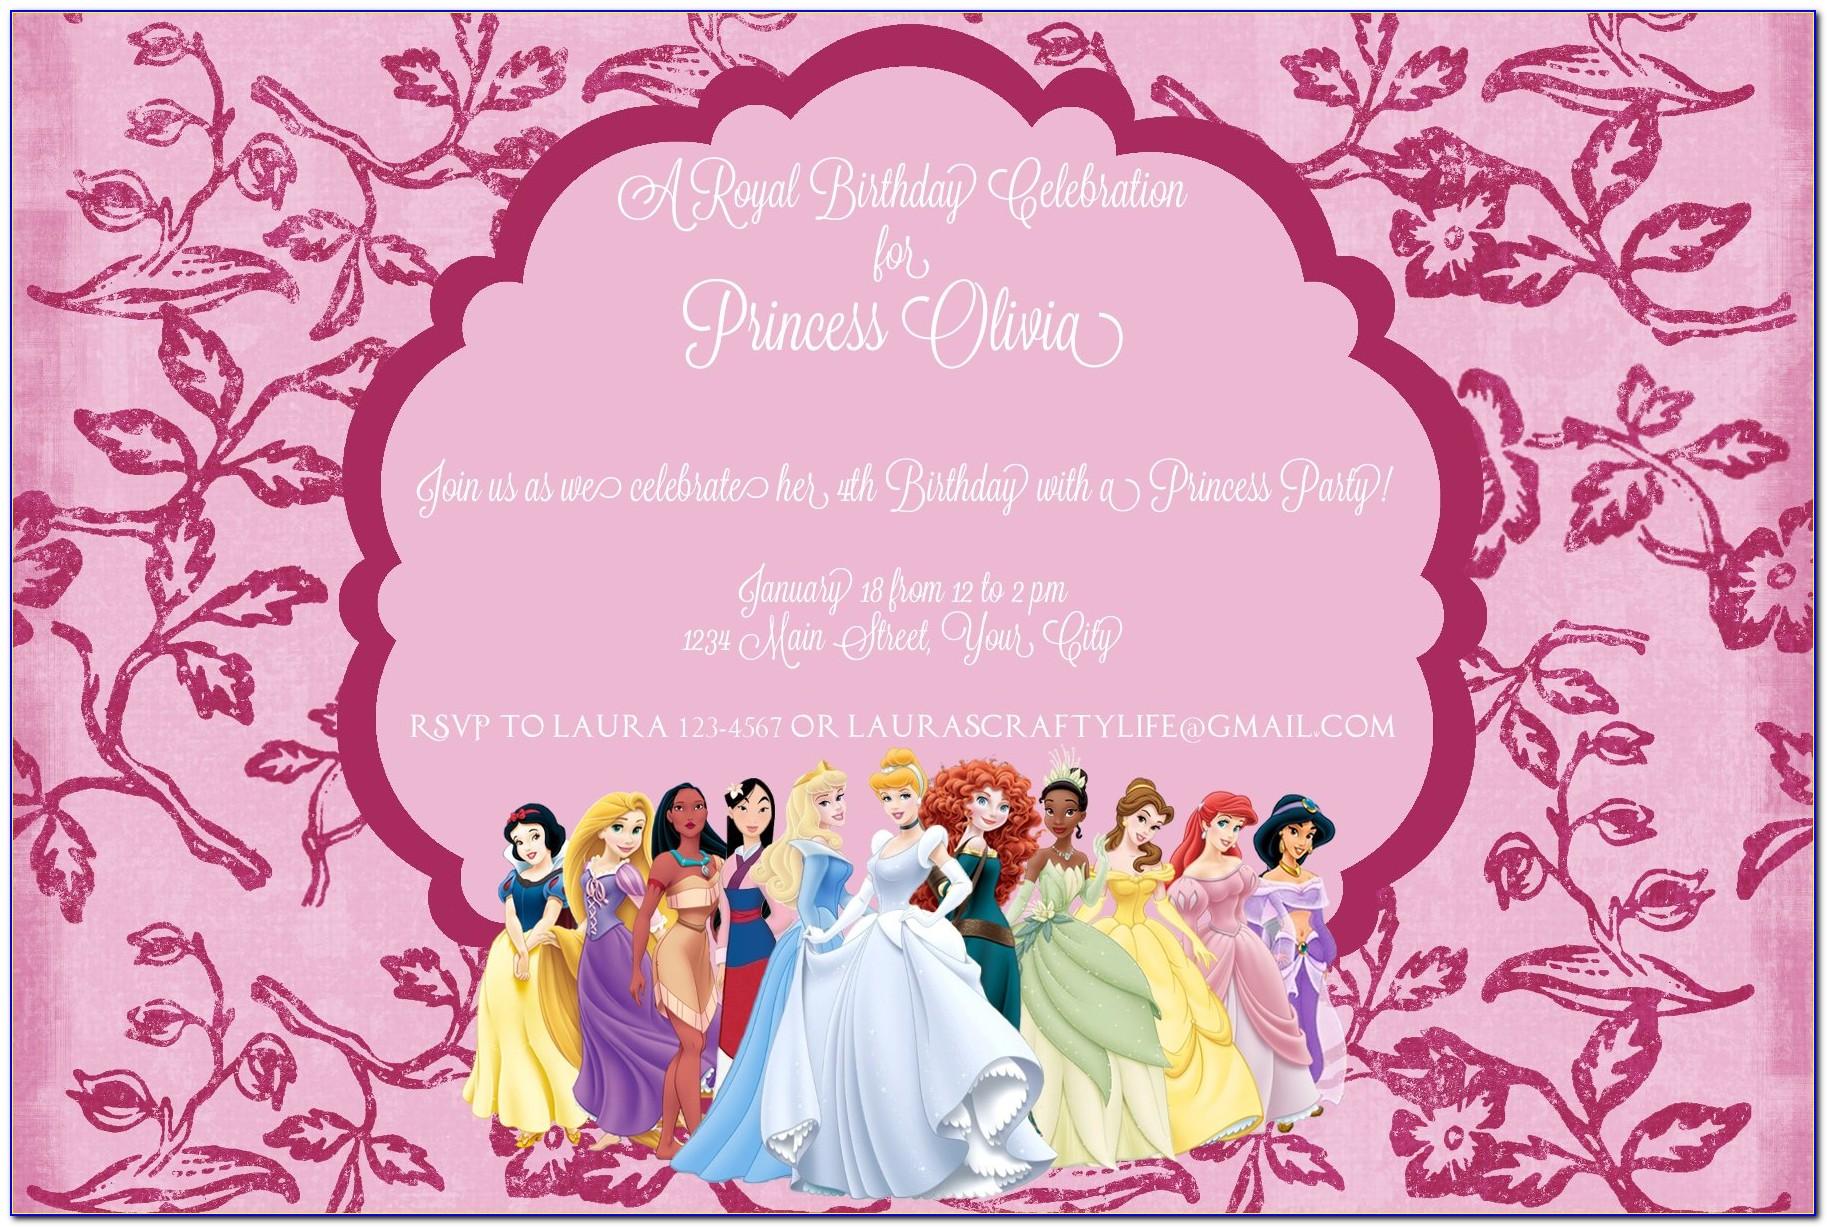 Princess Party Invitations Templates Free